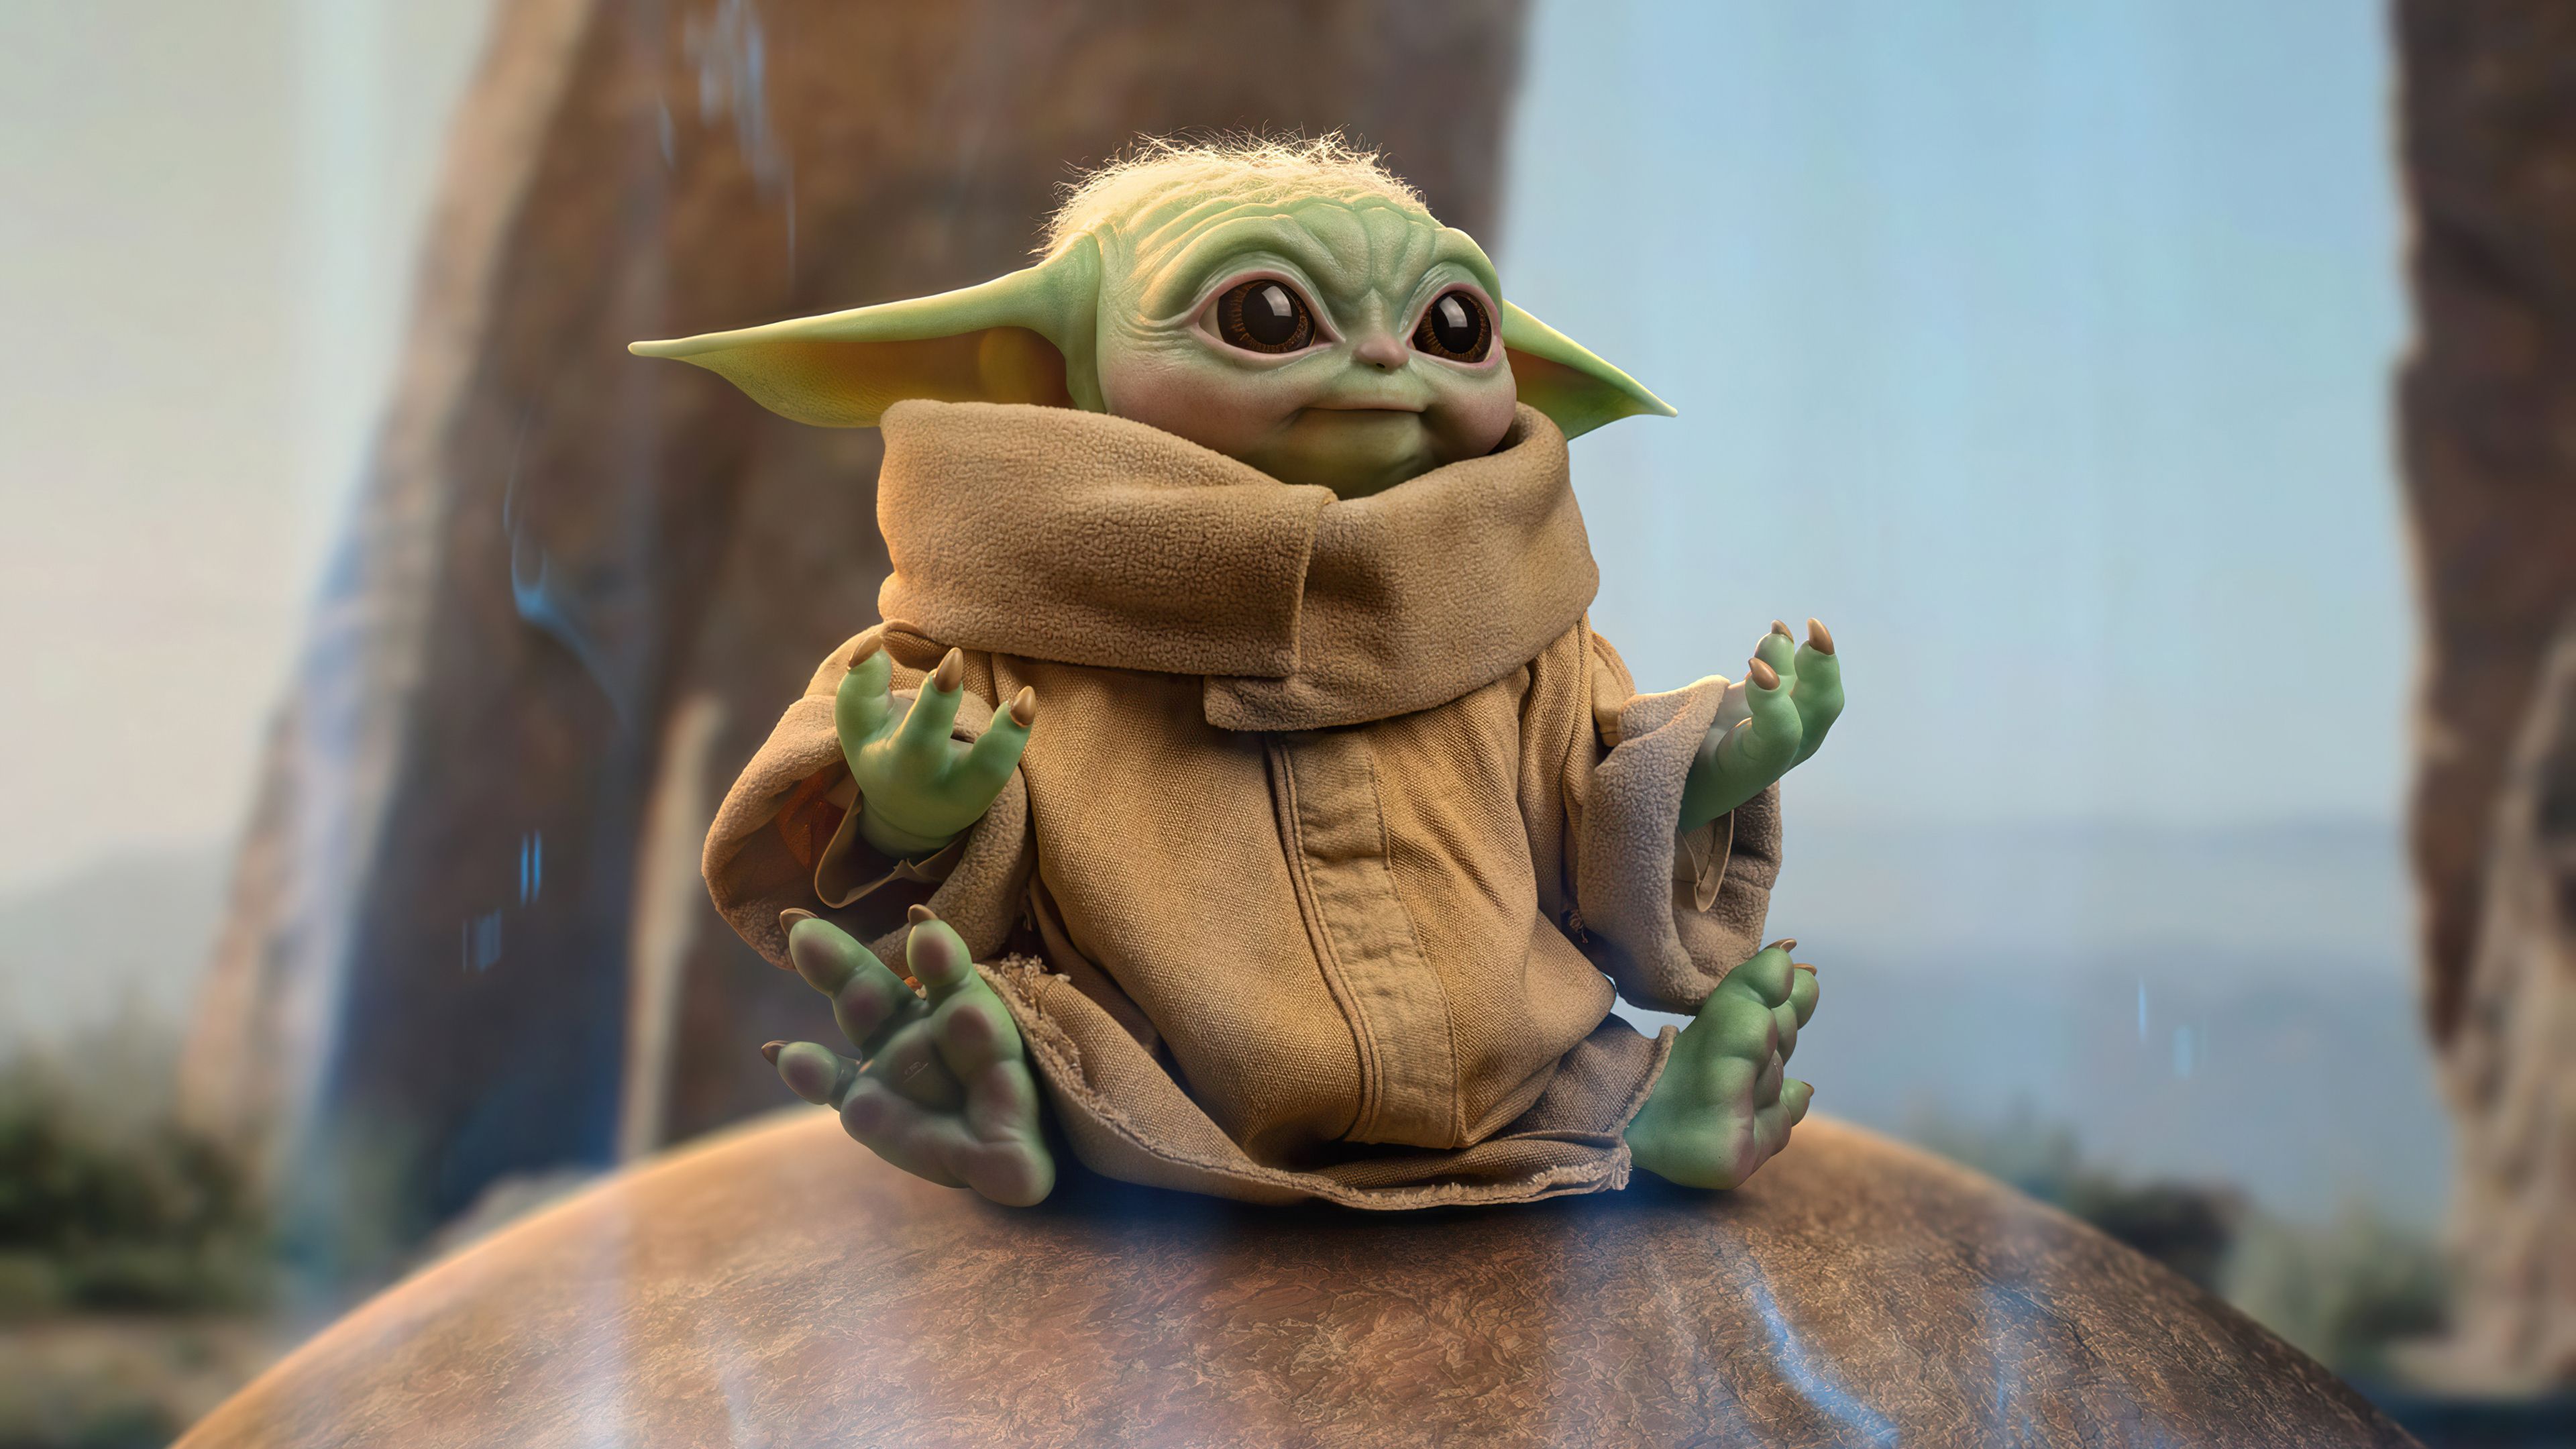  Baby Yoda Hintergrundbild 3840x2160. Baby Yoda Grogu Star Wars 2021 Wallpaper, HD TV Series 4K Wallpaper, Image, Photo and Background